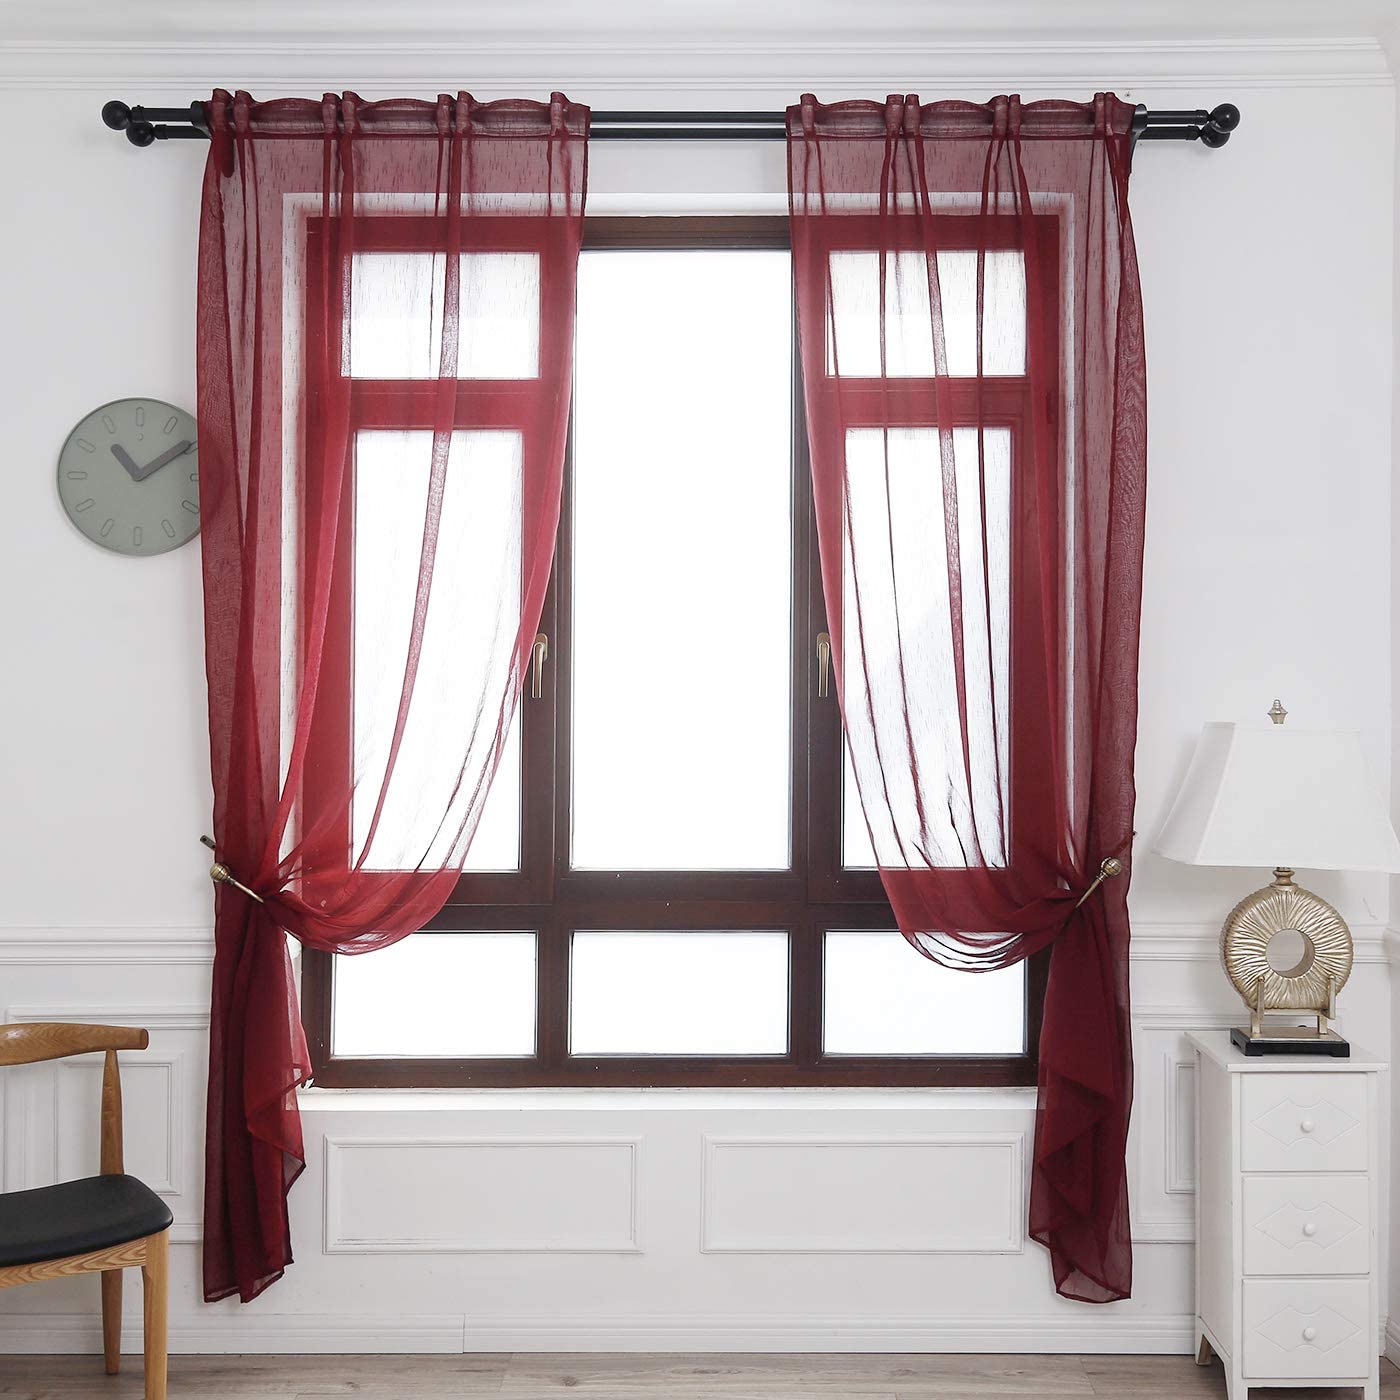 Cortinas opacas de velcro sin perforación, paneles de cortina, ventana de  bahía de dormitorio, cortinas transparentes translúcidas y opacas,  adecuadas